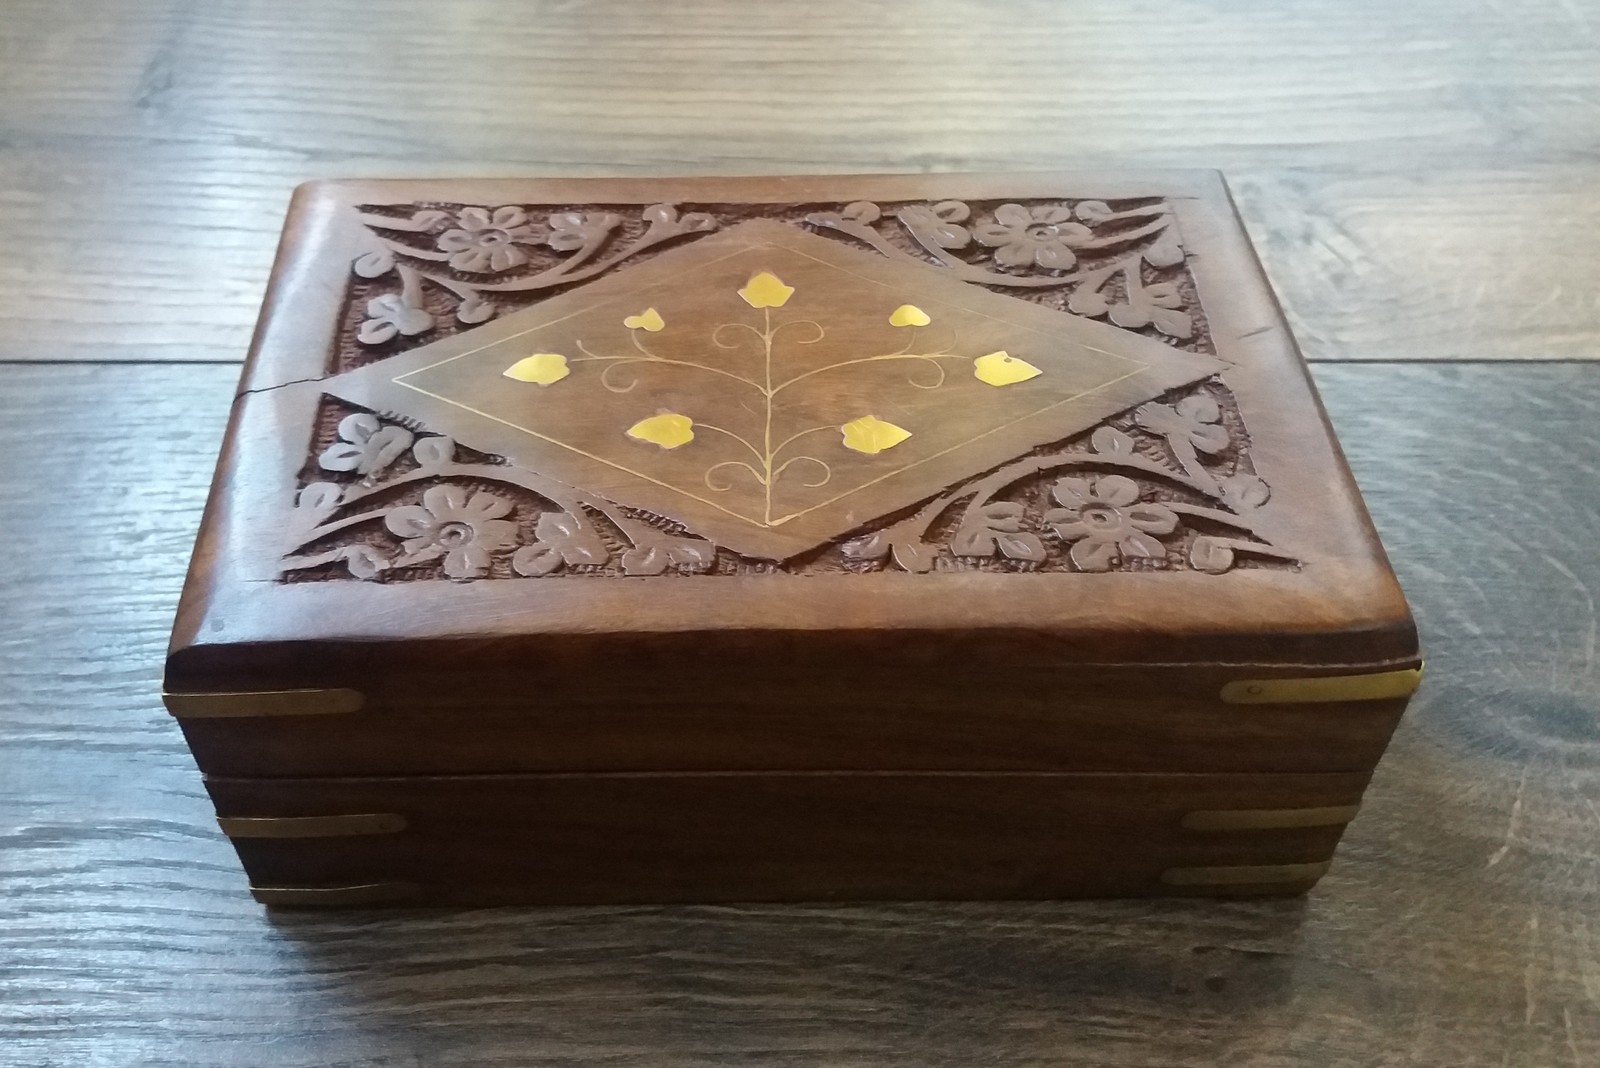 Handmade Wooden Box, Jewelry Box, Decorative Wooden Box - $48.00